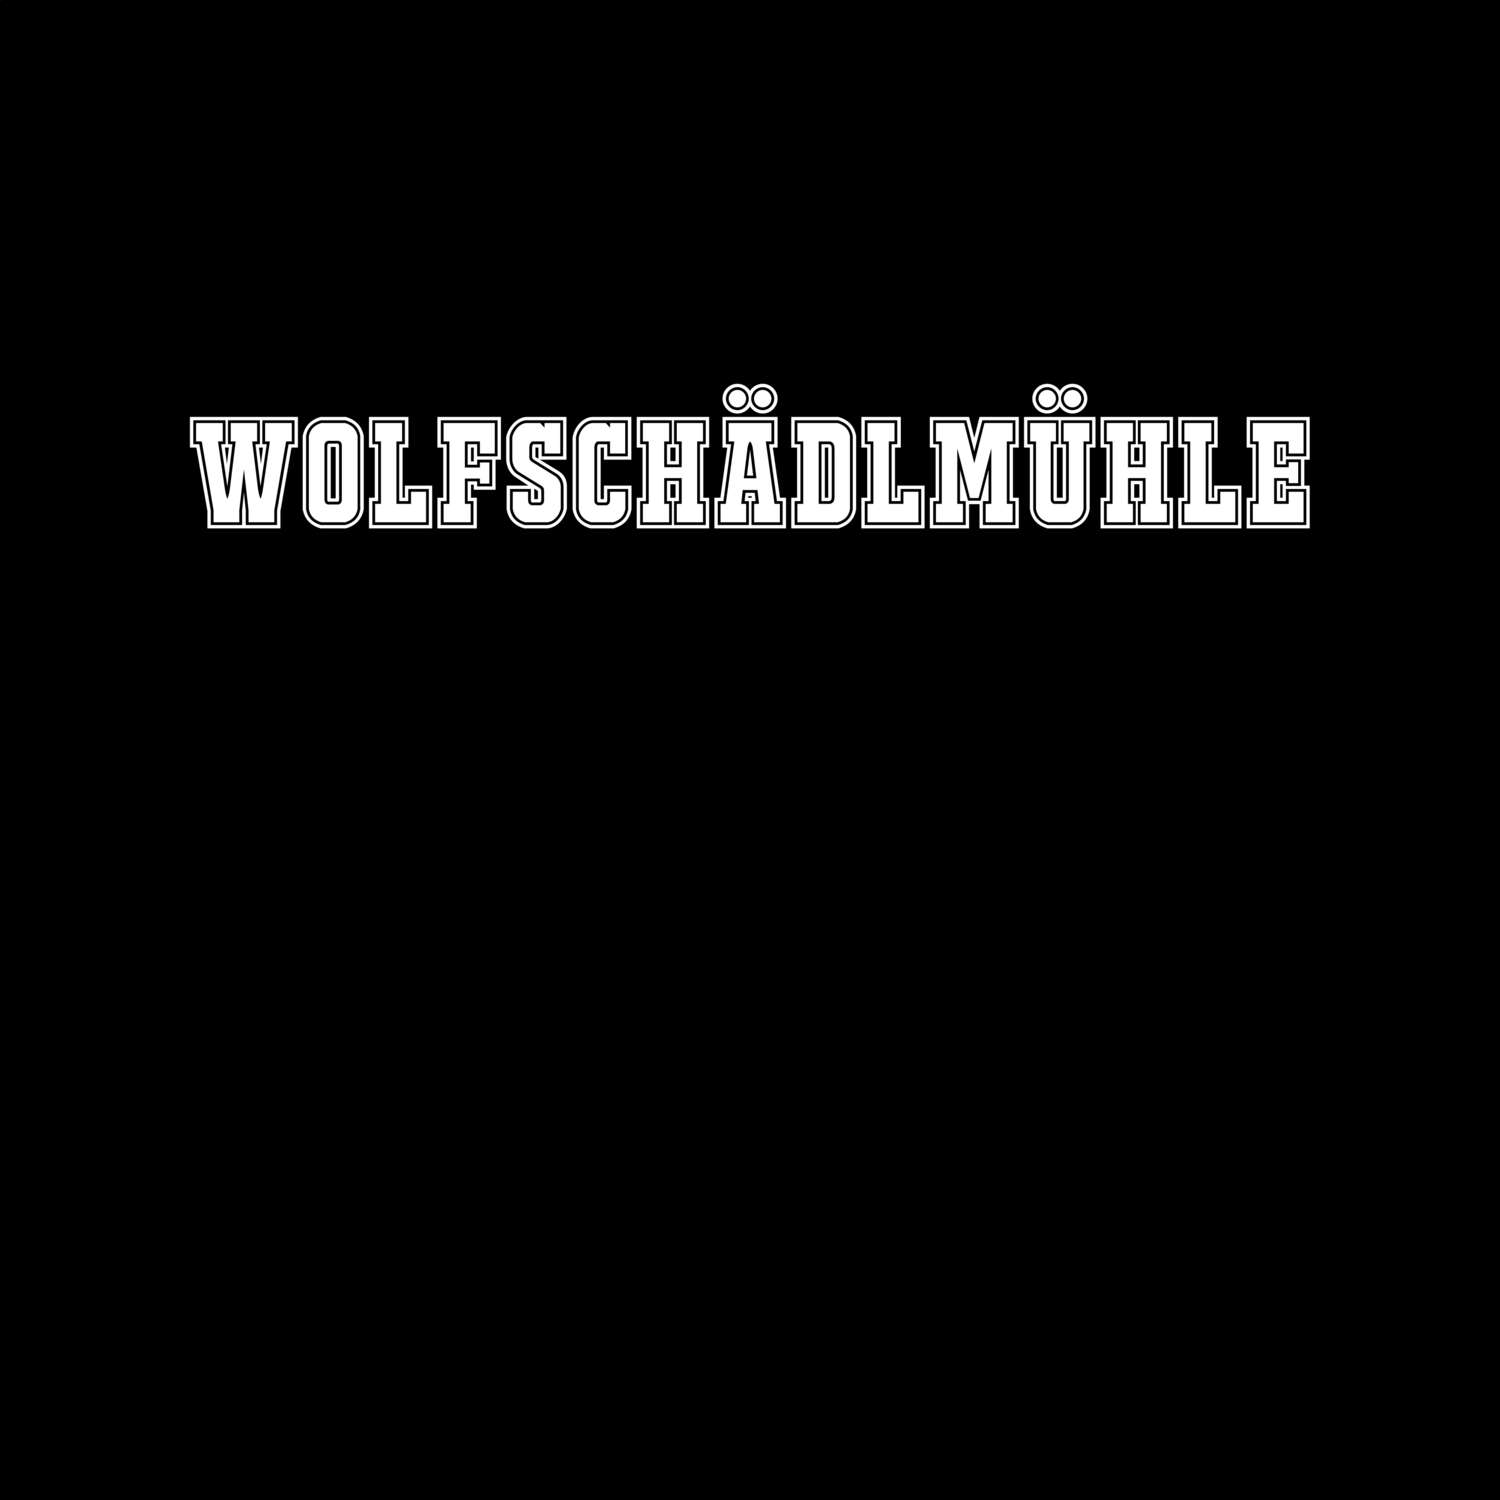 Wolfschädlmühle T-Shirt »Classic«